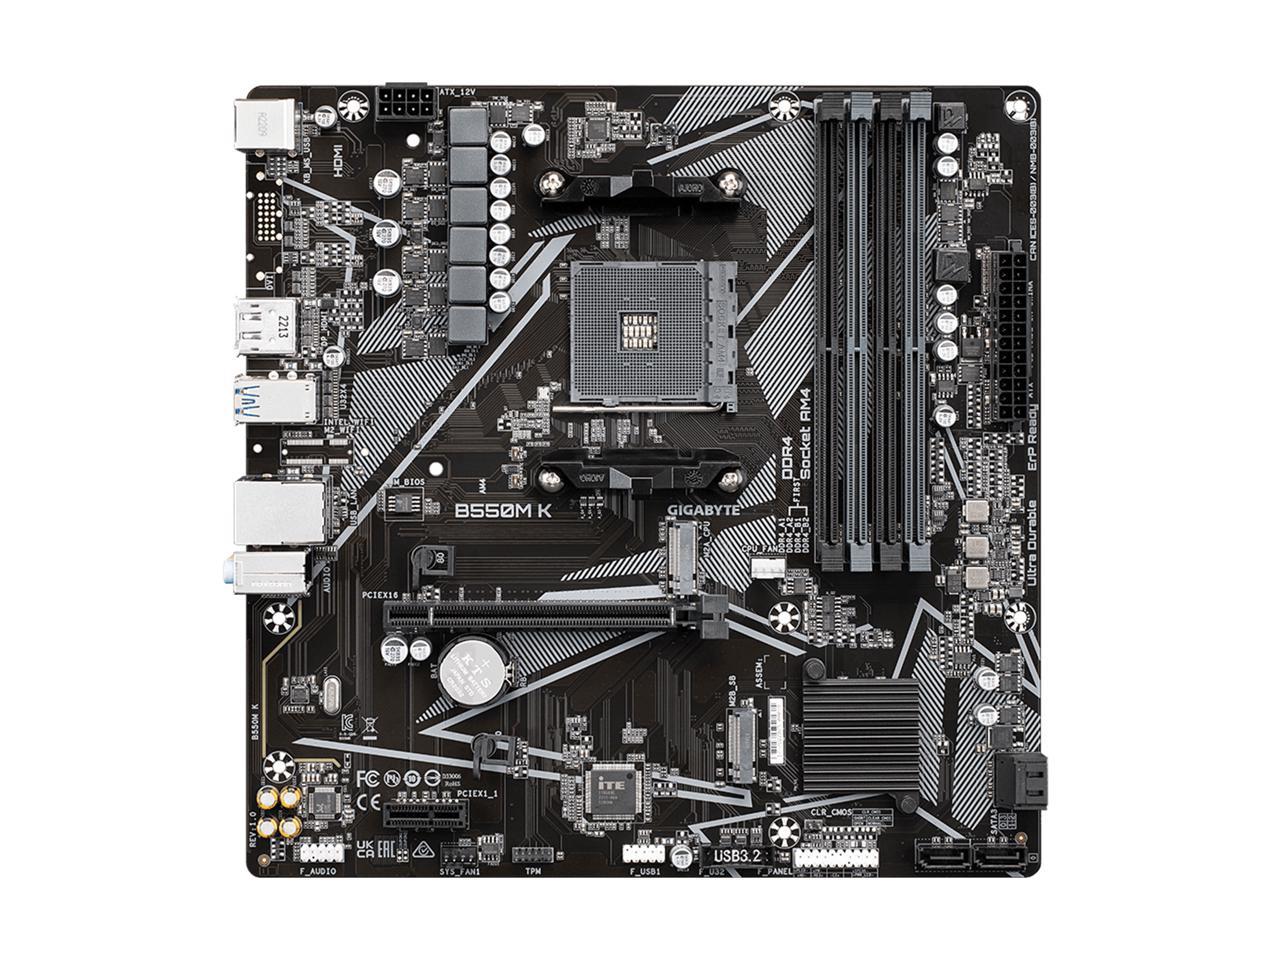 GIGABYTE B550M K AM4 AMD B550 Micro-ATX Motherboard